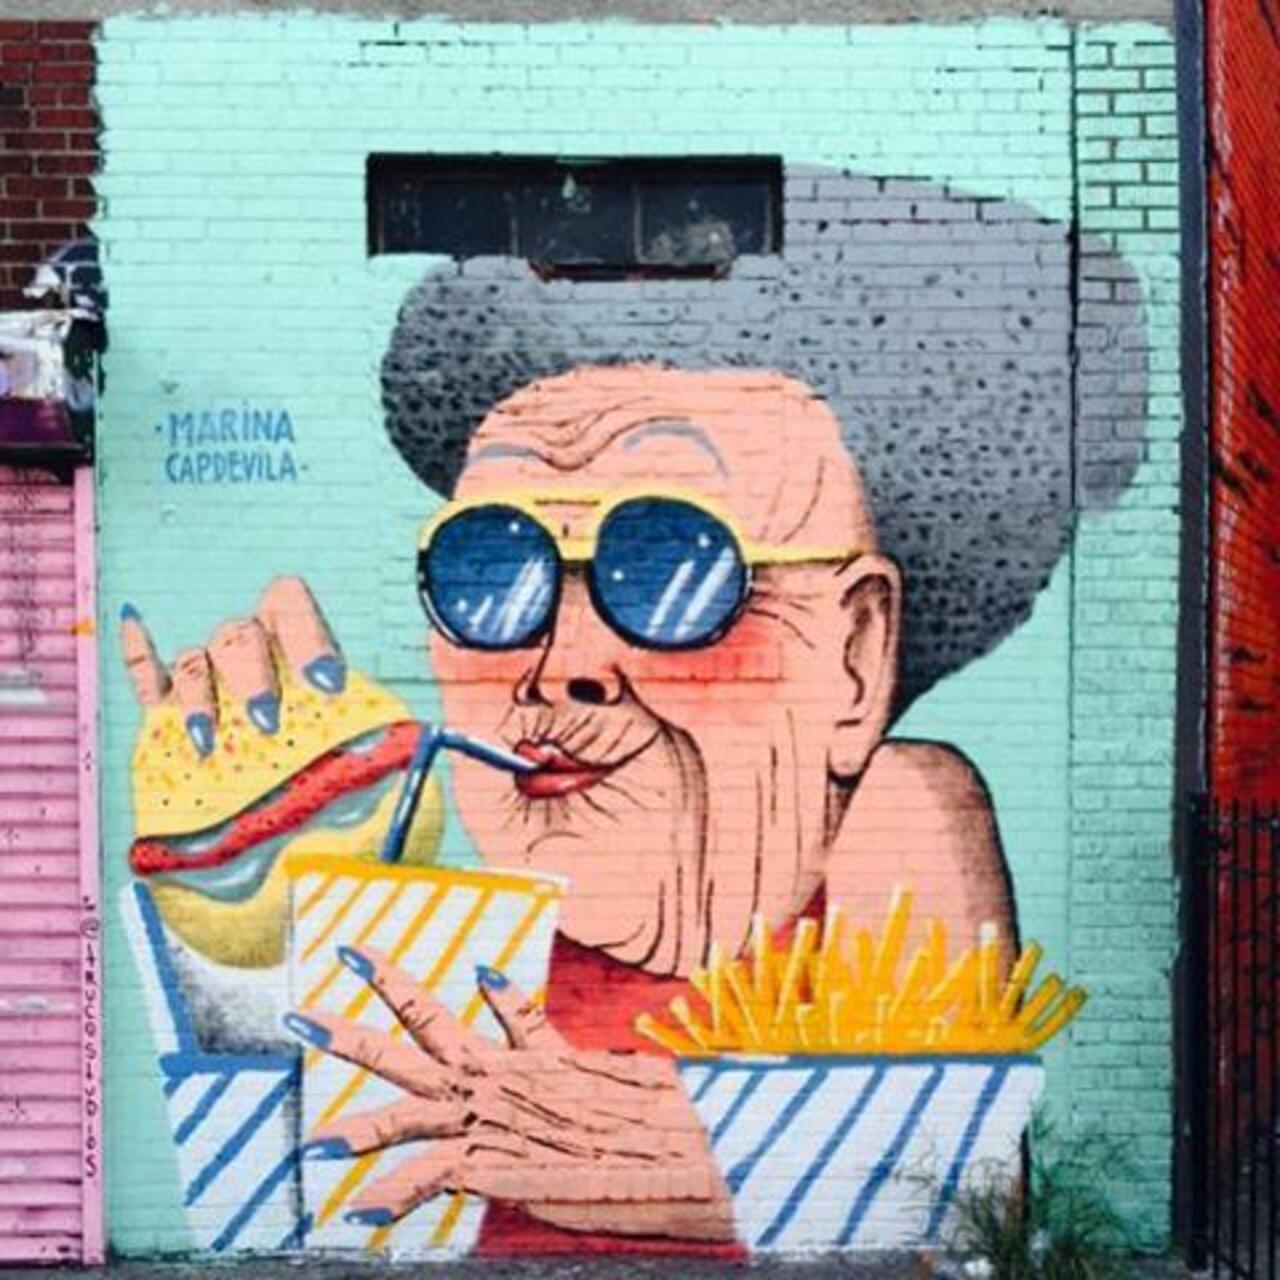 RT @StArtEverywhere: Marina #streetart #mural #painting #walls #graffiti #fumeroism #brooklyn #nyc #newyorkcity #nycstreetart #streetart… http://t.co/Utm26qMod4